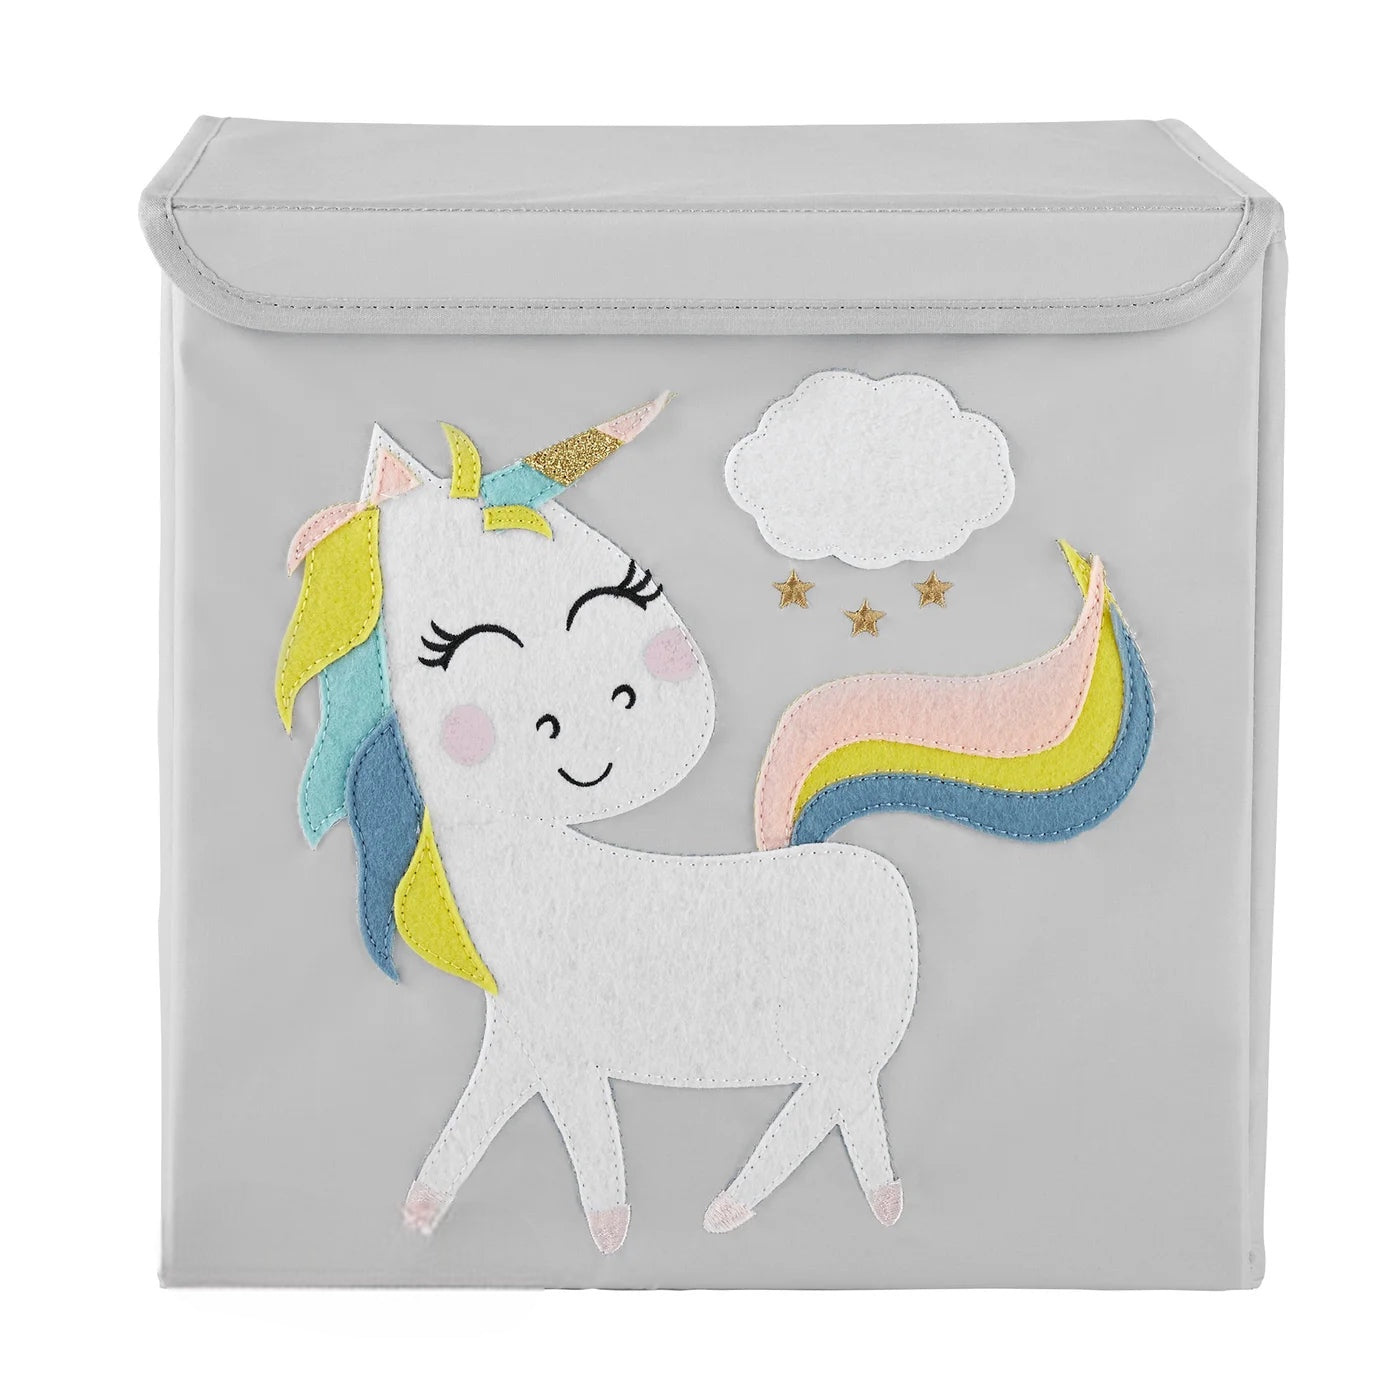 Personalized Storage Box - Unicorn